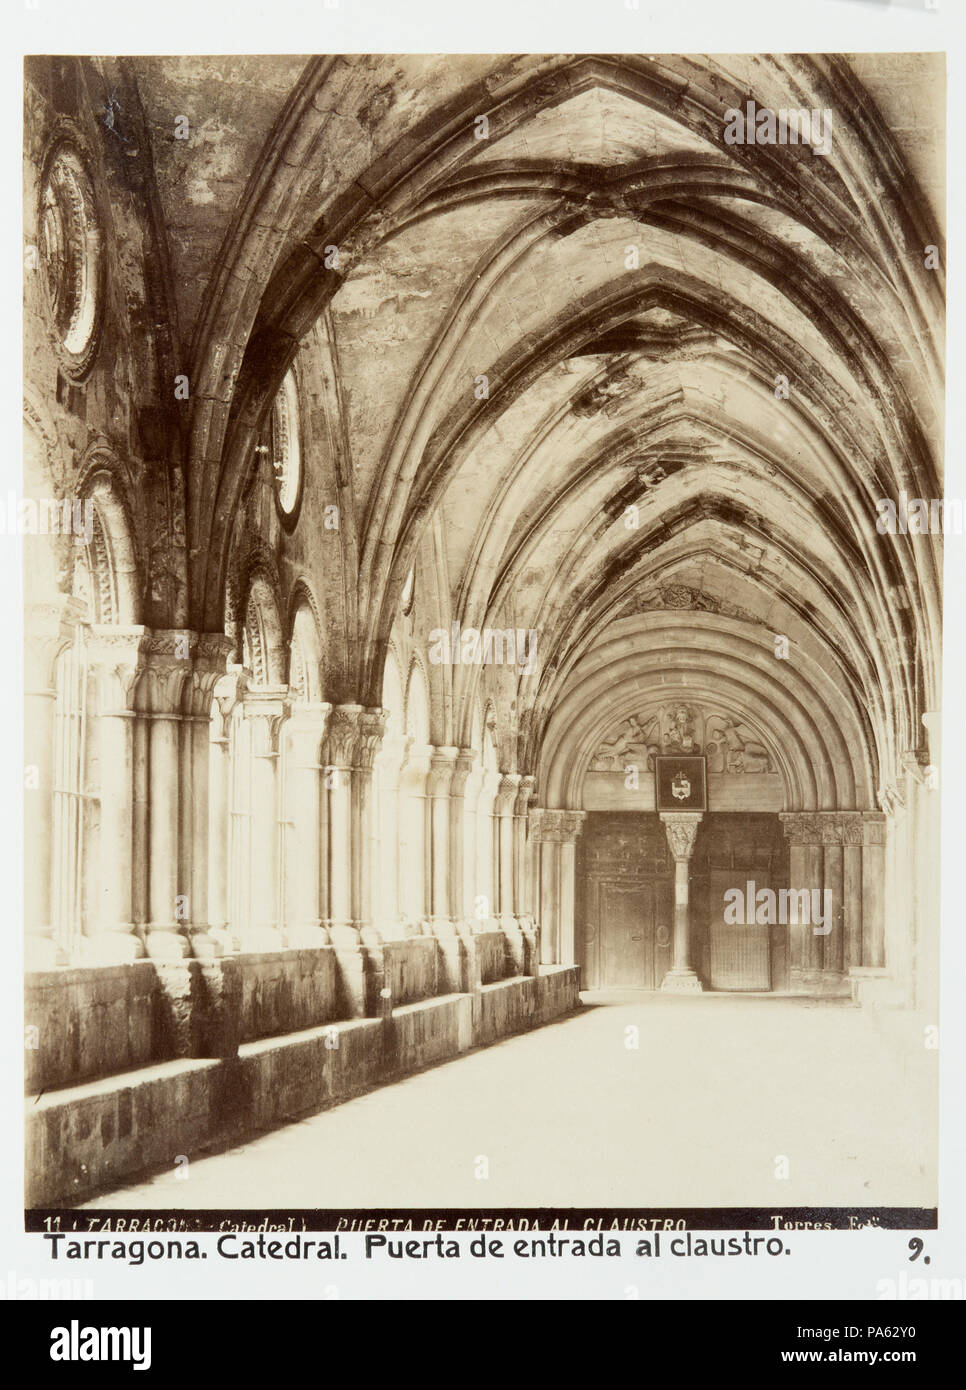 88 Fotografi av Tarragona. Catedral, puerta de entrada al claustro - Hallwylska museet - 104756 Stock Photo